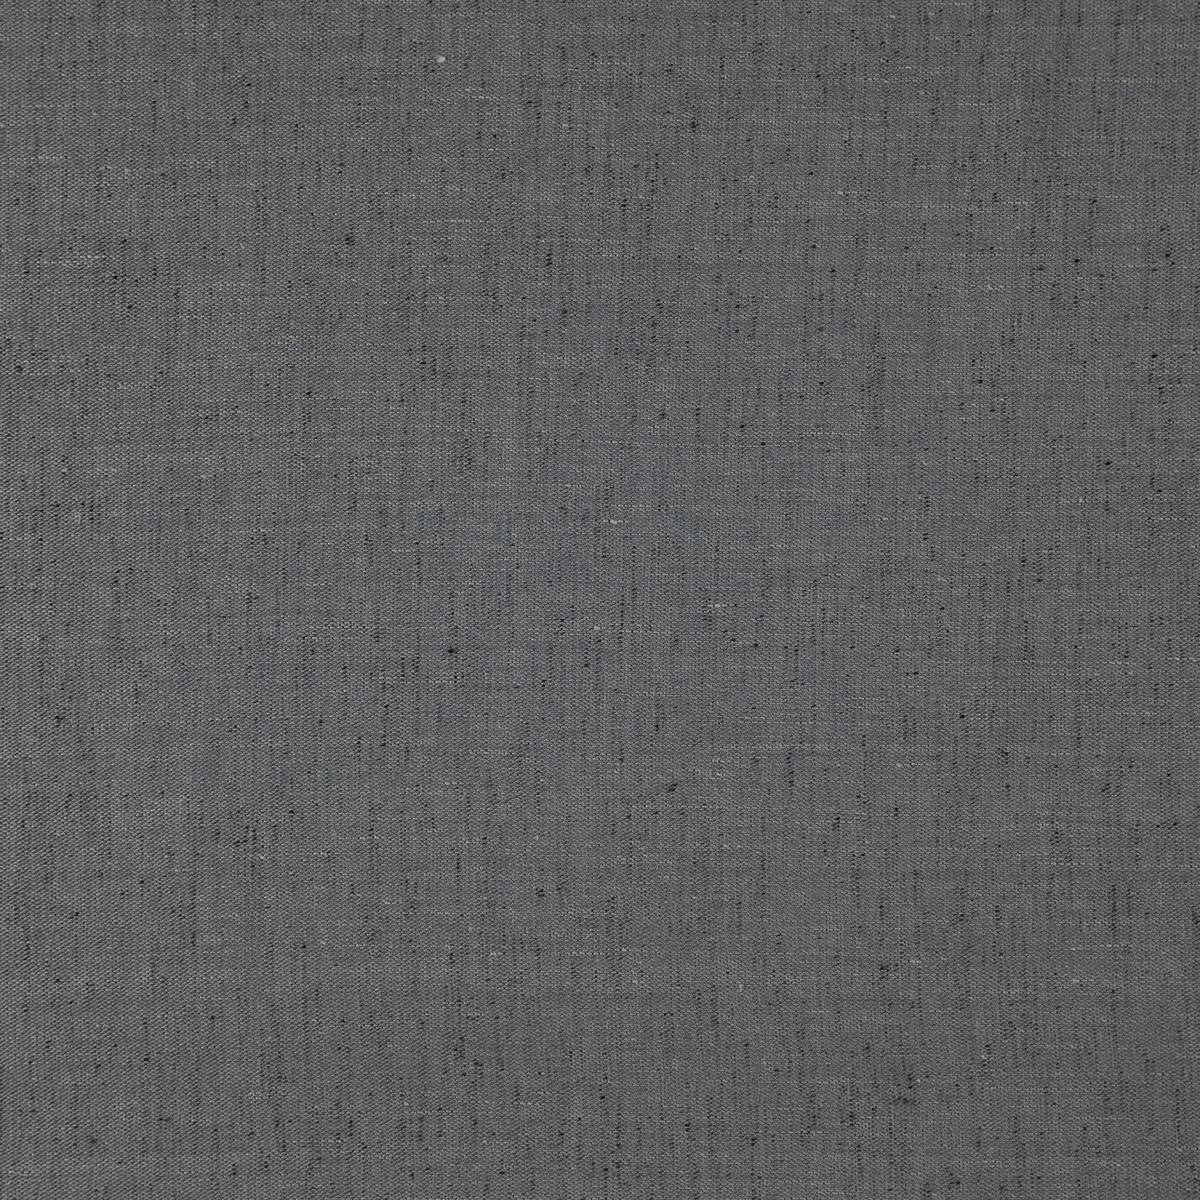 Borasco Zinc Fabric by Harlequin